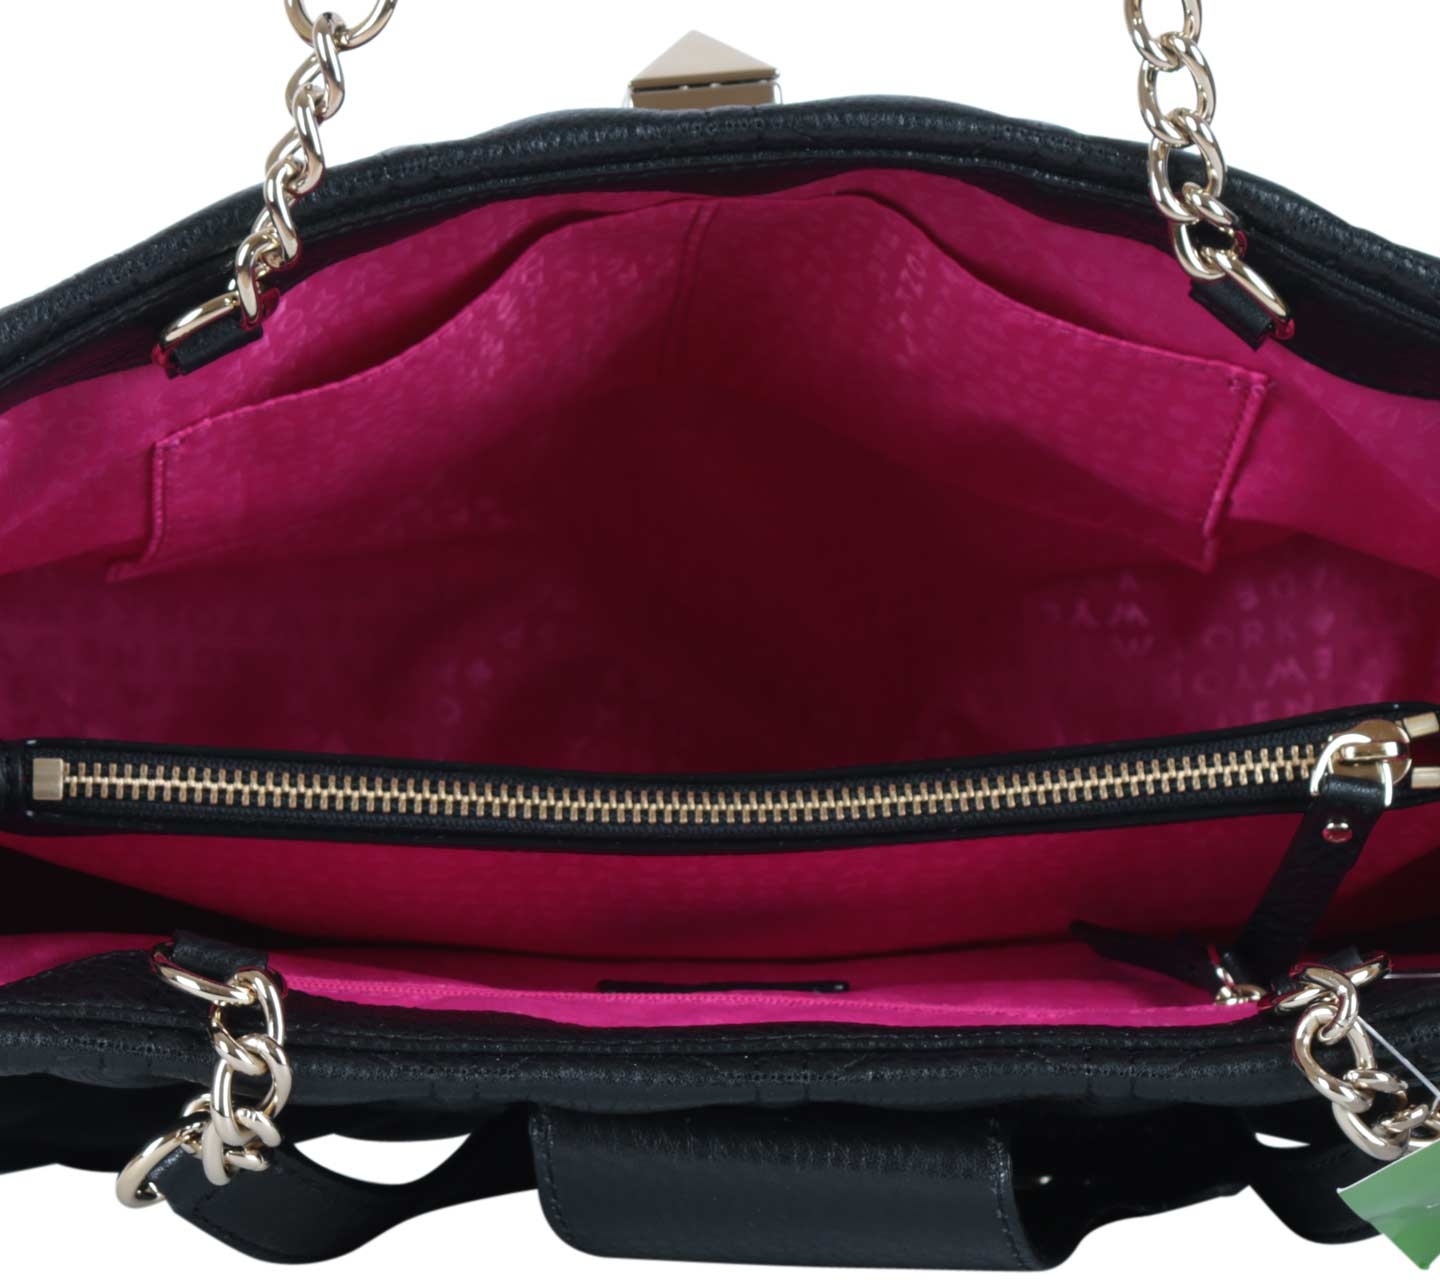 Kate Spade Black Astor Court Handbag